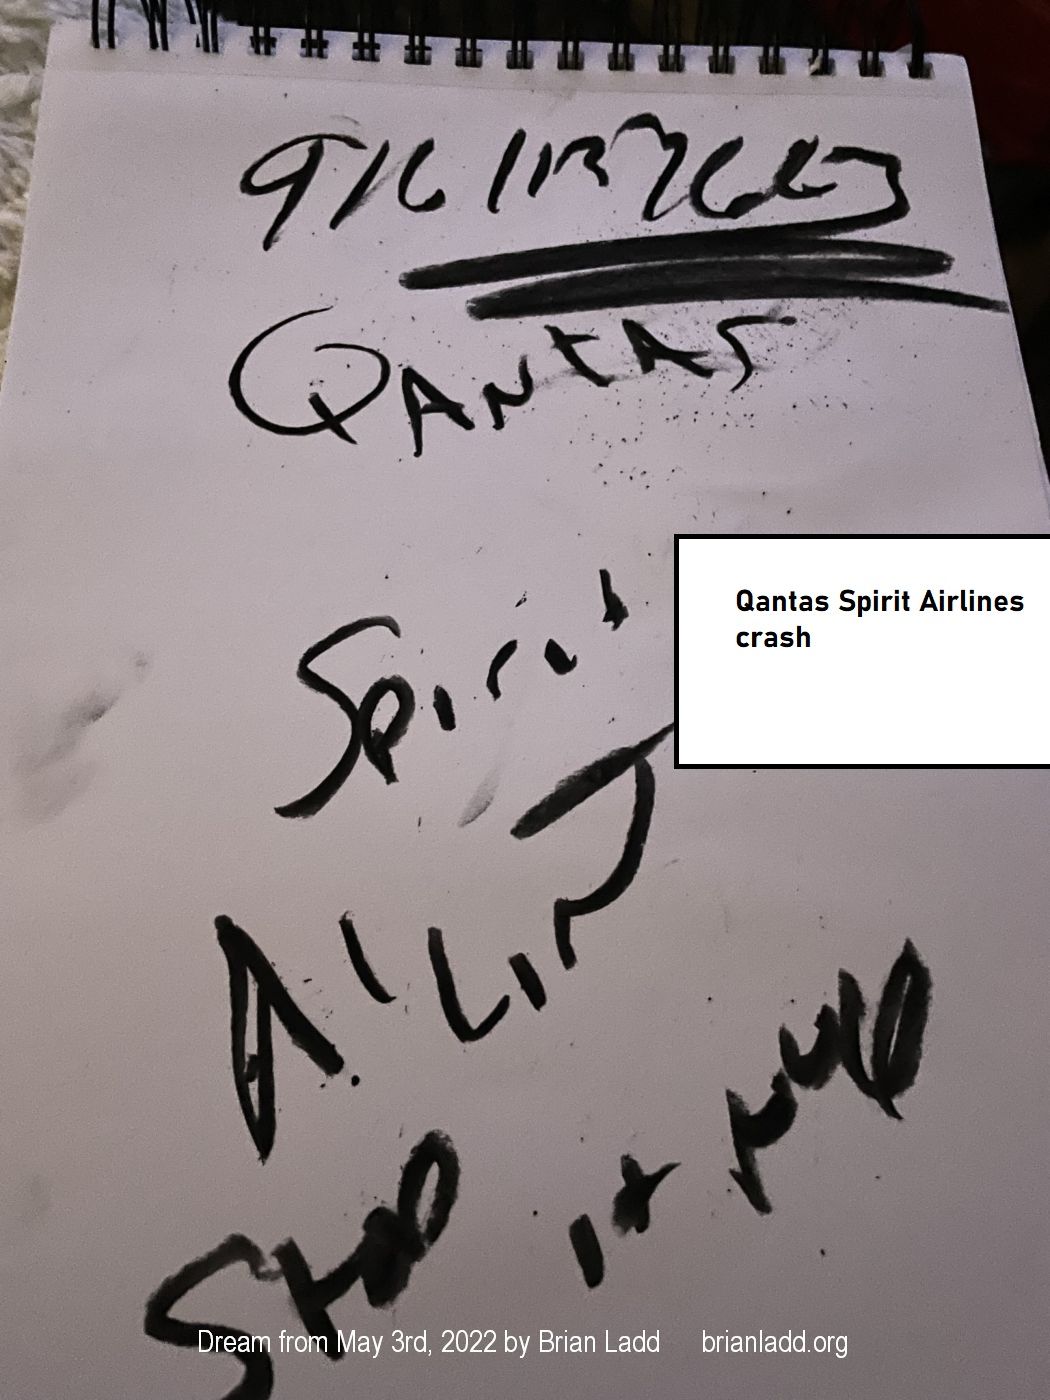 3 May 2022 2   Qantas Spirit Airlines crash...
Qantas Spirit Airlines crash.
